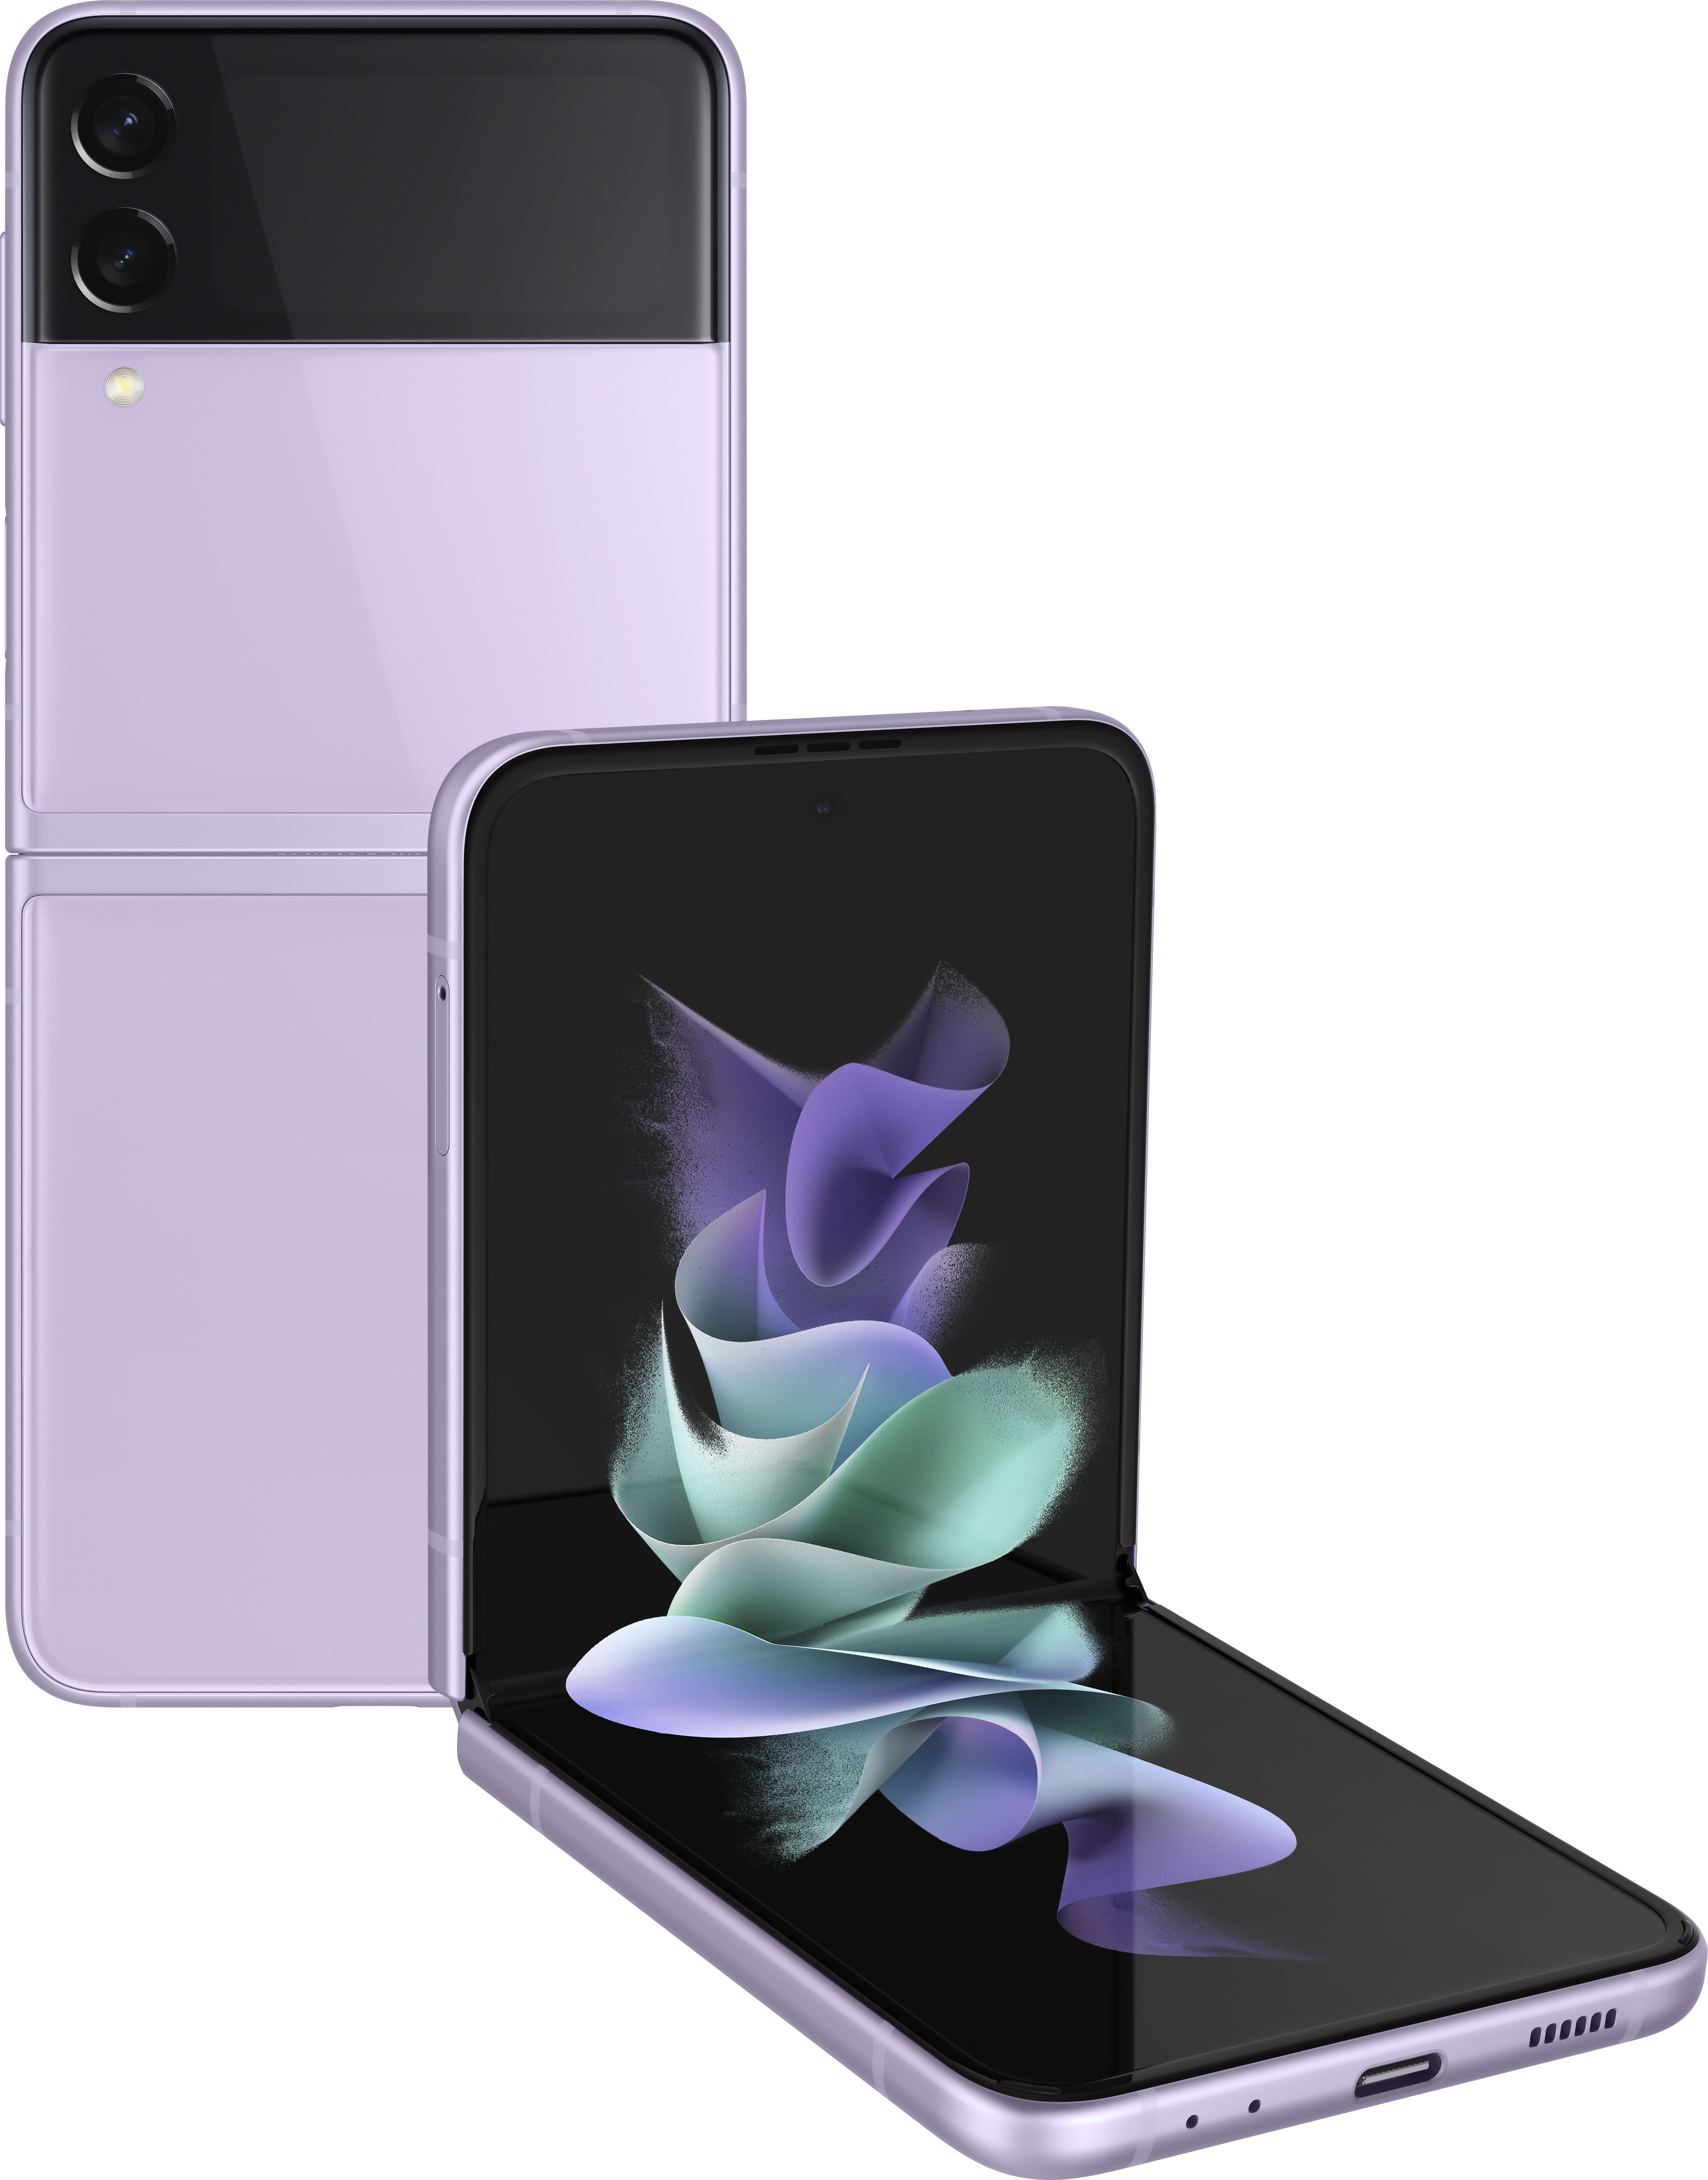 Samsung - Galaxy Z Flip3 5G 128GB - Lavender (T-Mobile)